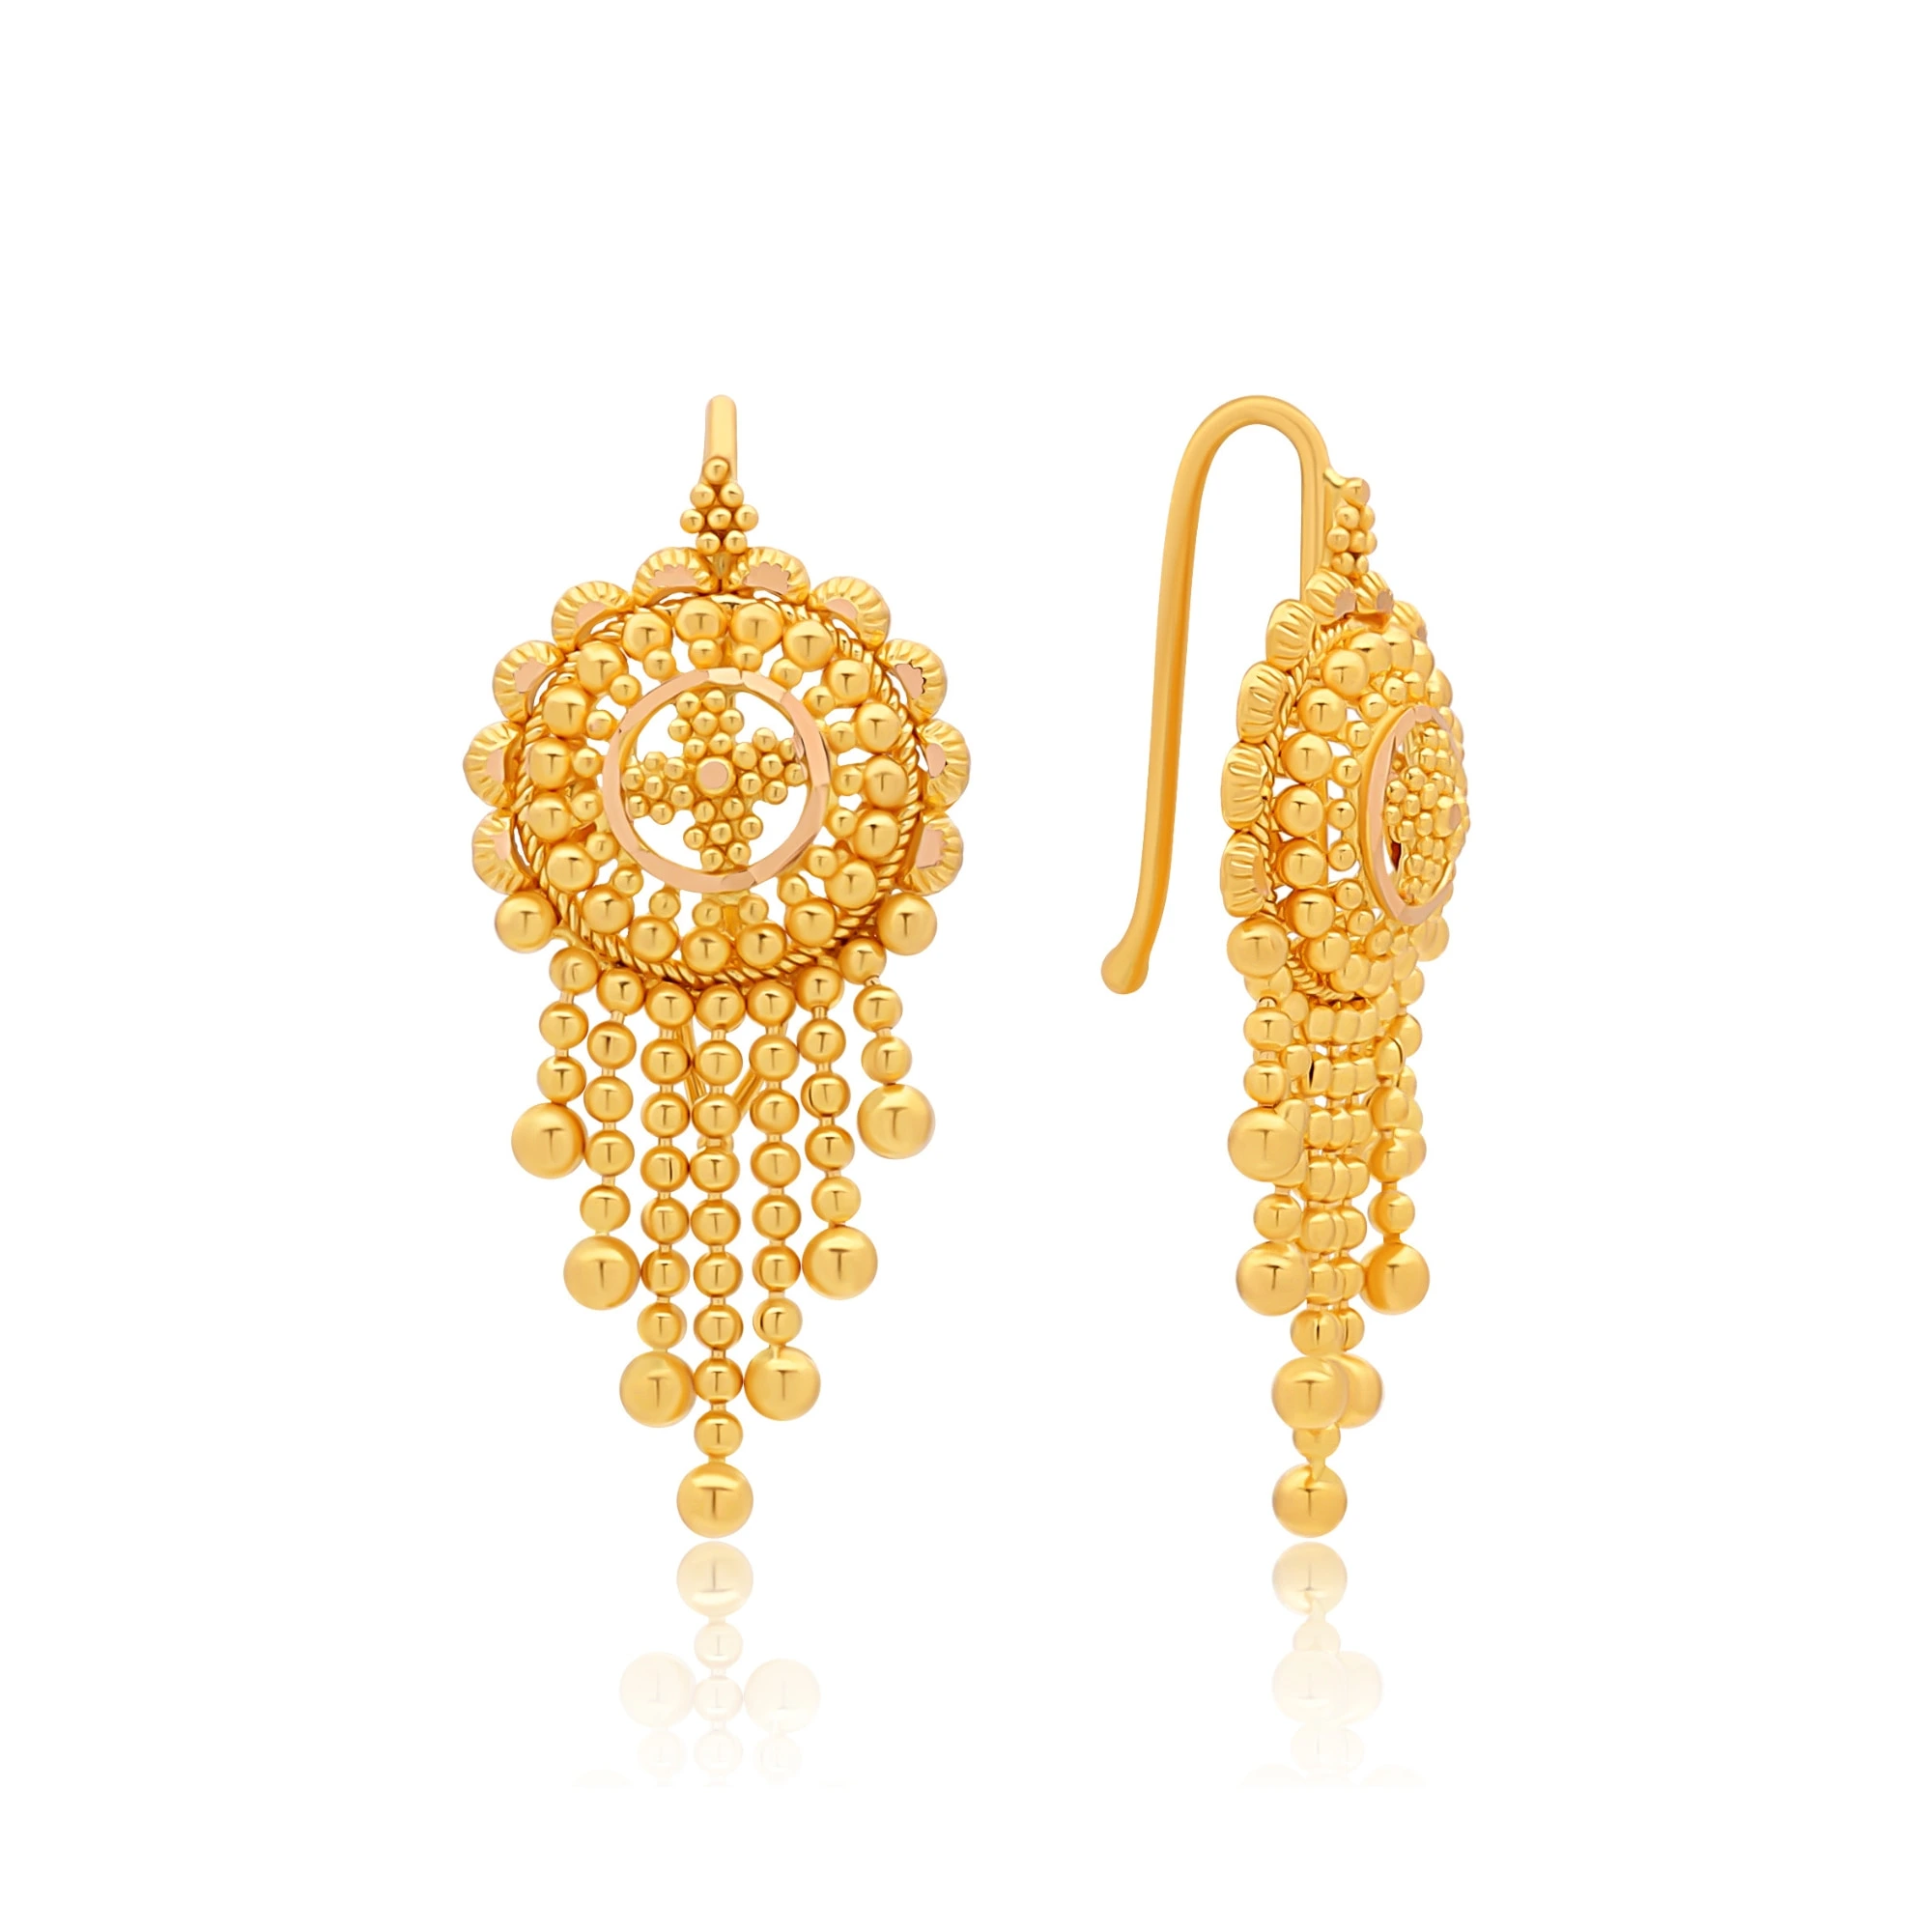 Buy Matte Gold Earrings/ South Indian Earrings/ Kemp Earrings/temple  Earrings/ Indian Wedding Jewelry/ Temple Jewelry/amrapiali Inspired Online  in India - Etsy